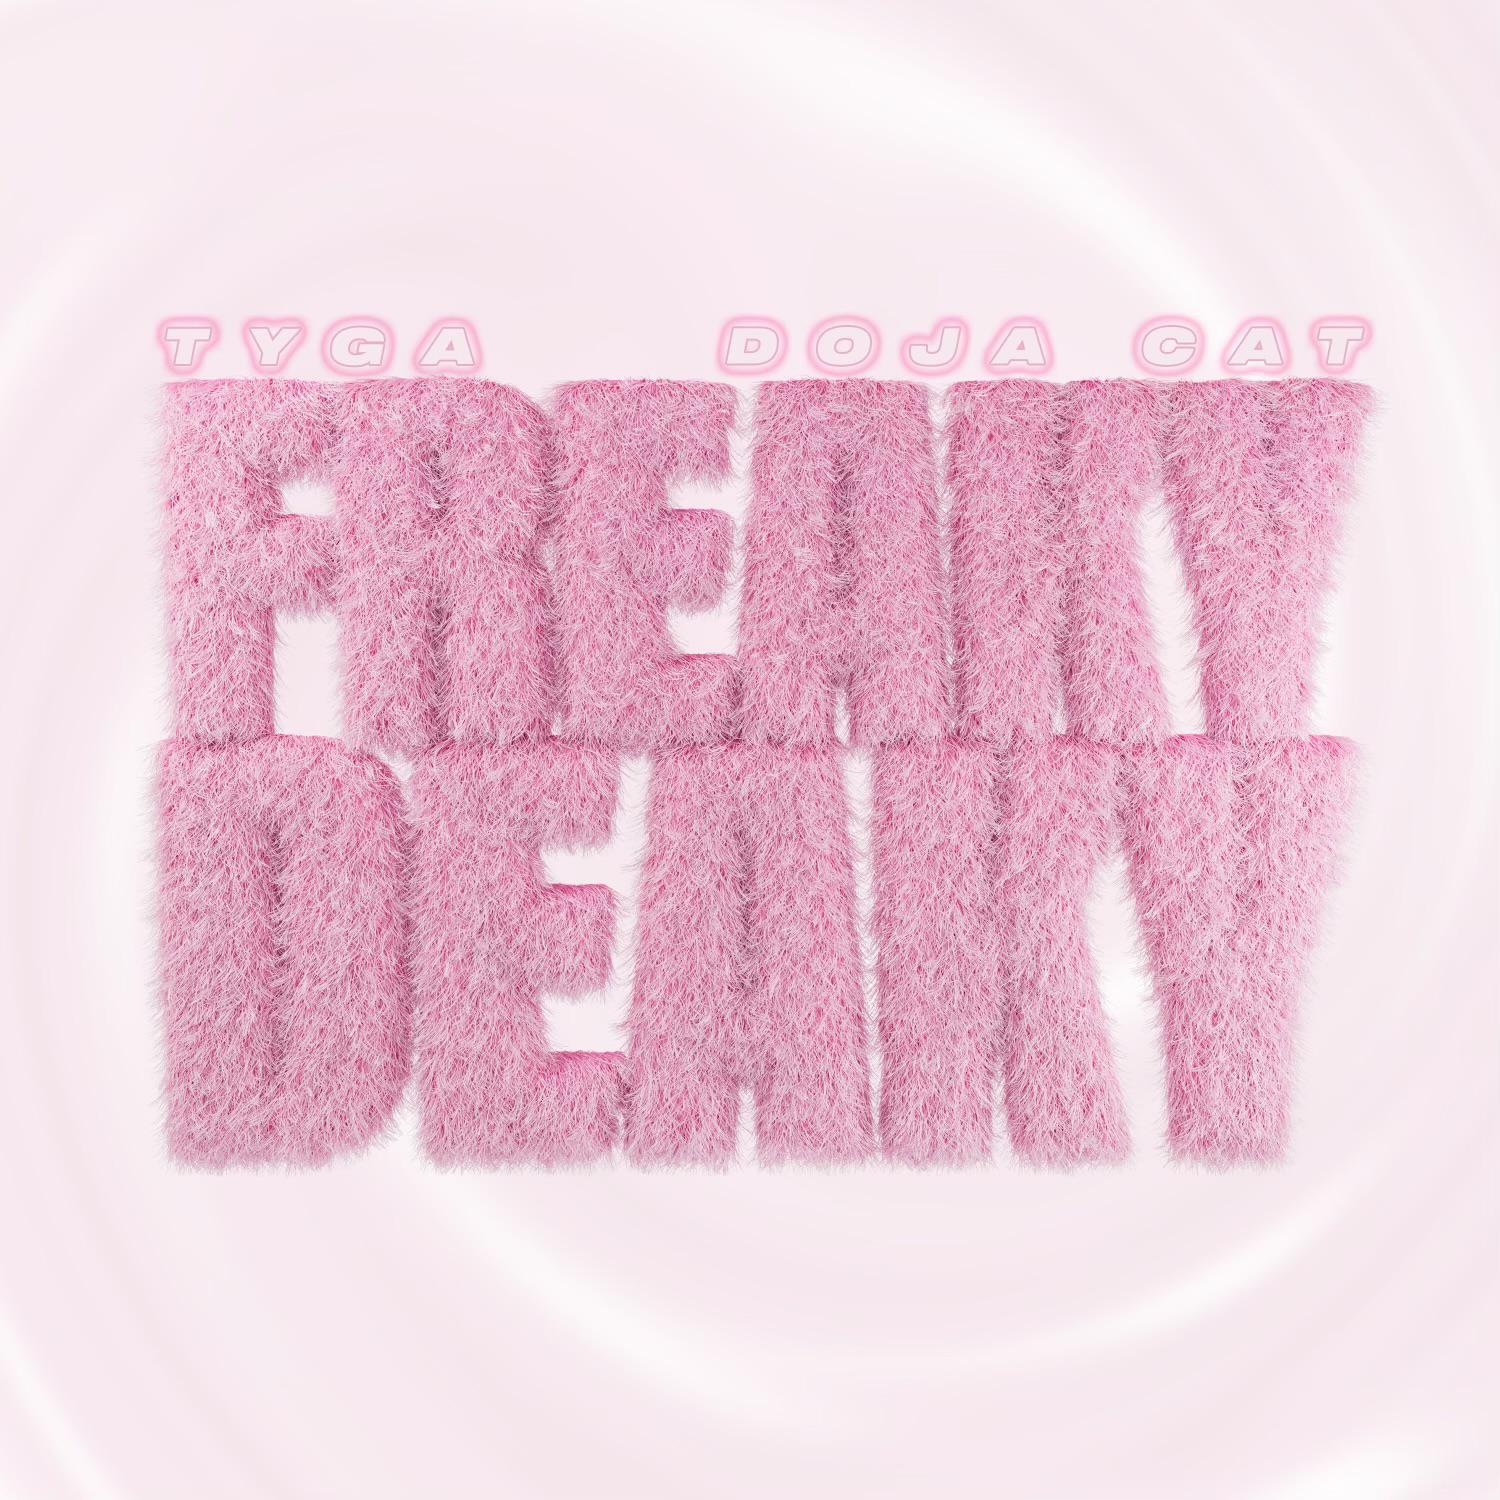 Freaky Deaky歌词 歌手Tyga / Doja Cat-专辑Freaky Deaky-单曲《Freaky Deaky》LRC歌词下载